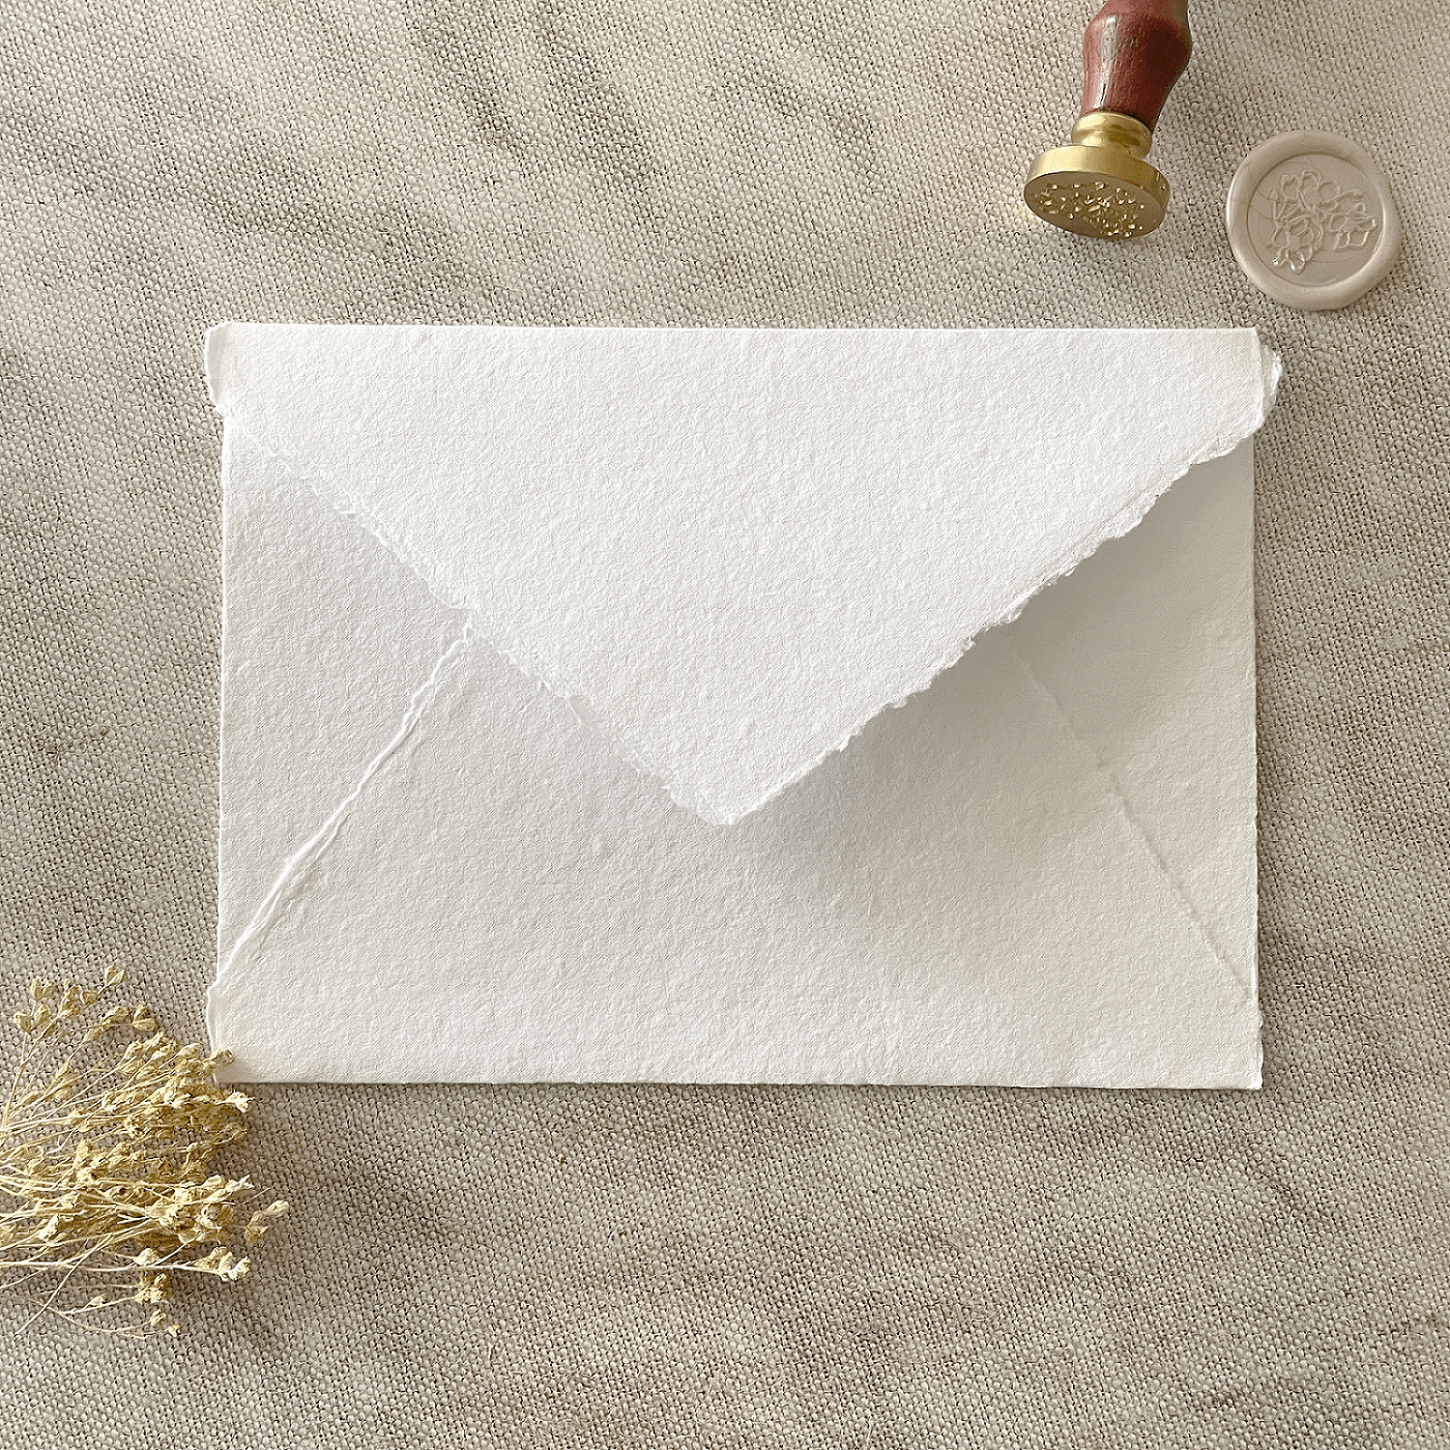 Premium White Handmade Paper, Card and Envelopes (vegan)  ImagineDIY Envelope 5x7 